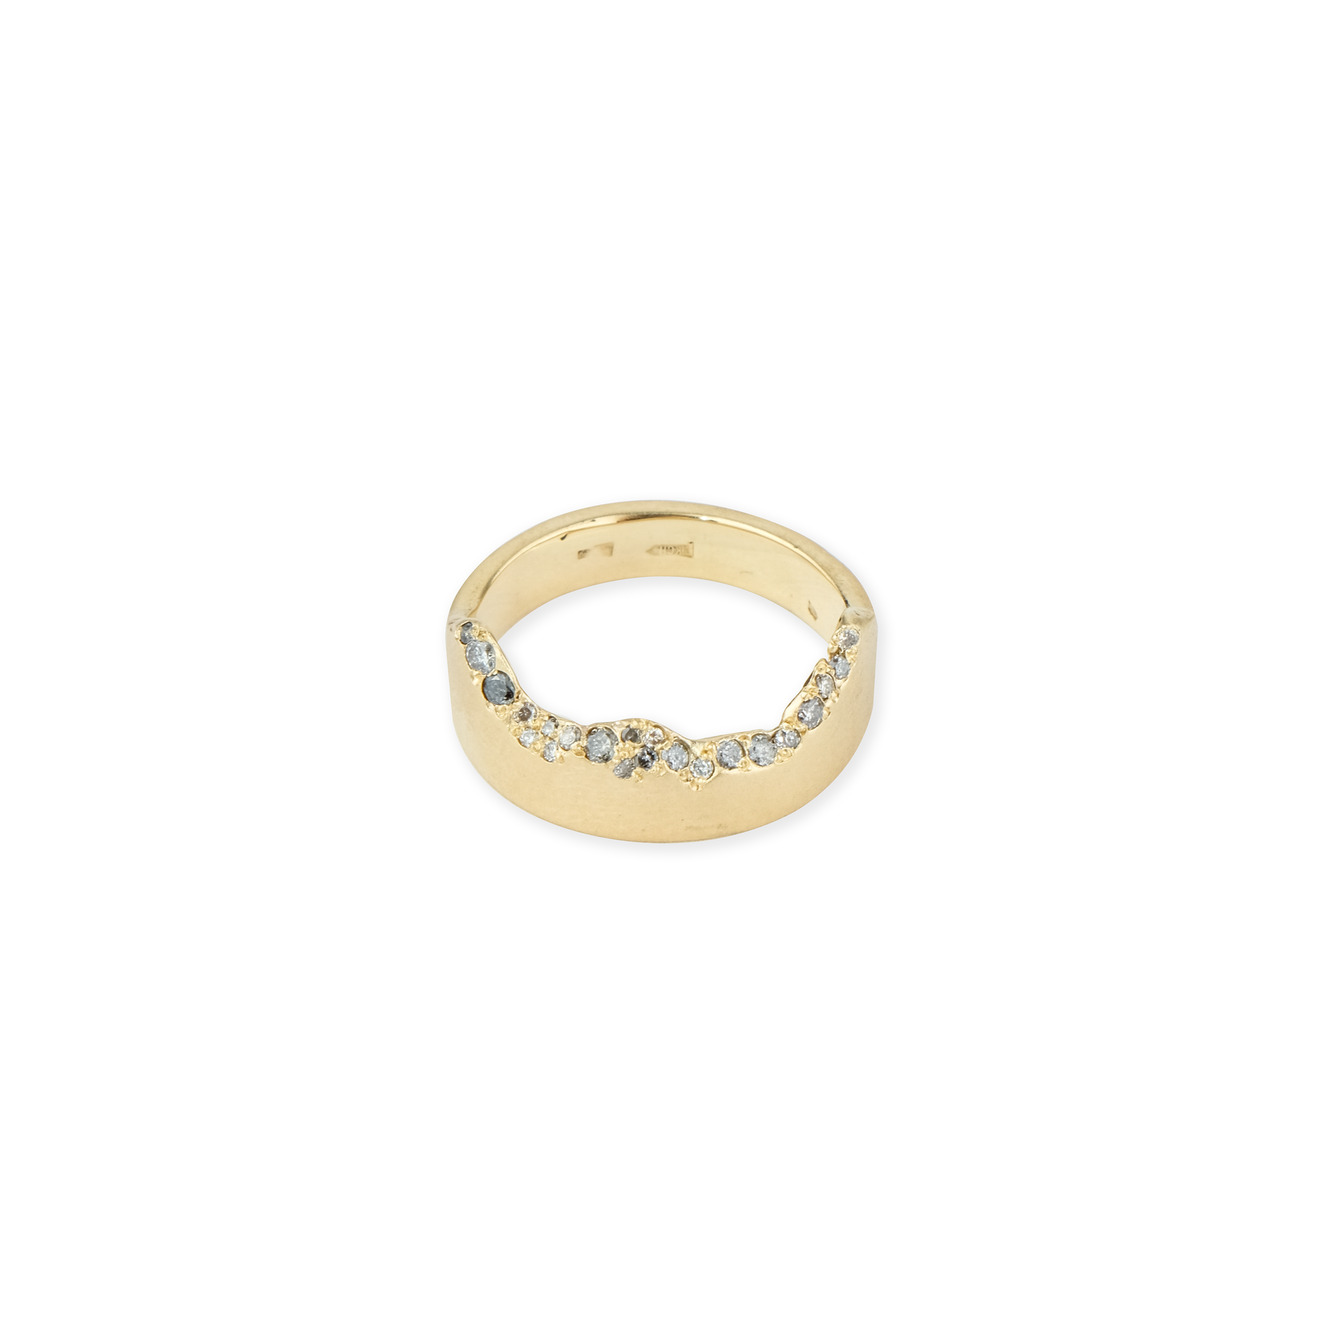 Kintsugi Jewelry Кольцо Satin из золота с бриллиантами leonie jewelry кольцо из золота с молочным кварцем kisses